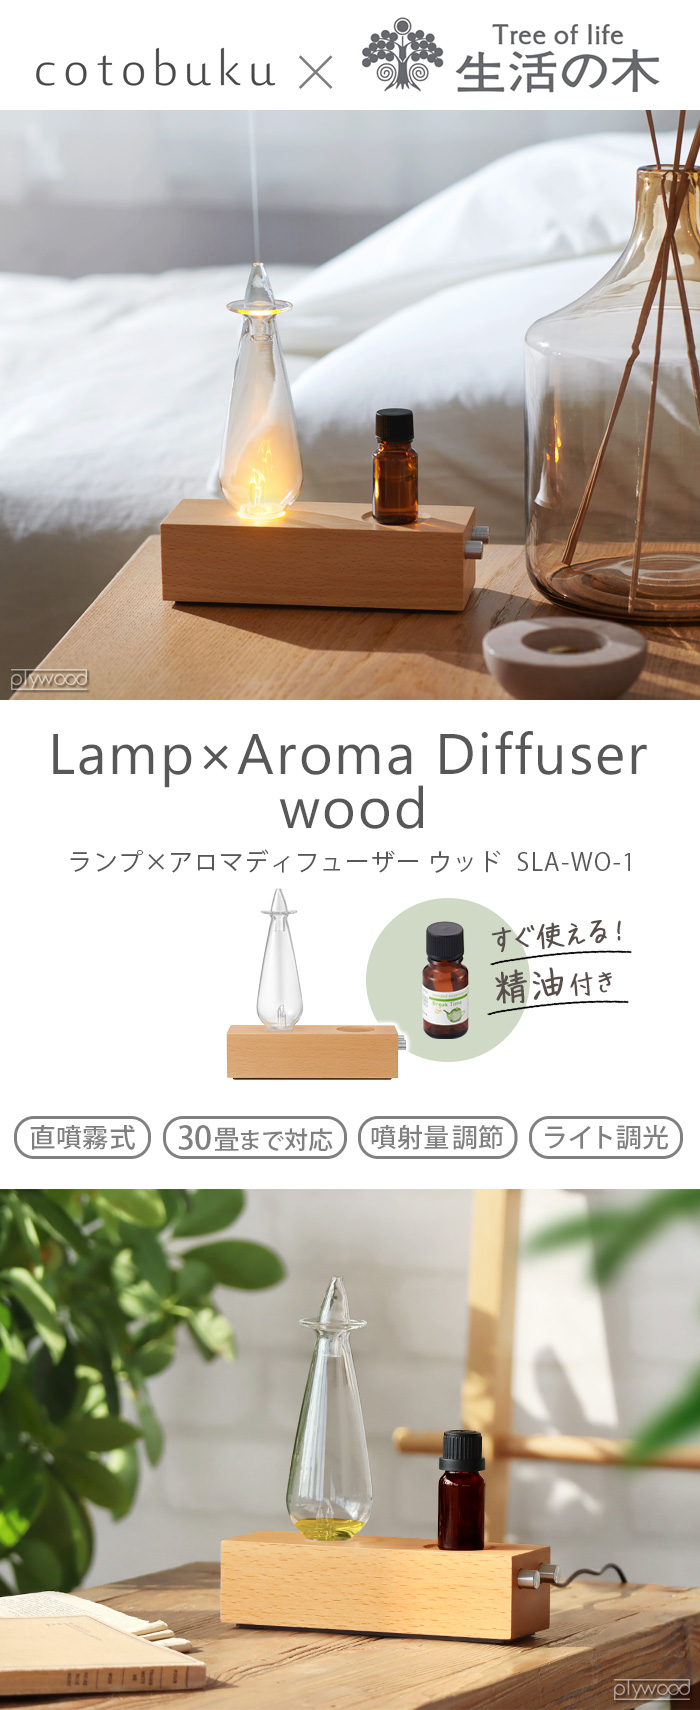 【LINEギフト用販売ページ】アロマディフューザー cotobuku×生活の木 Lamp×Aroma Diffuser SLA-WO-1 コトブク  ランプ×アロマディフューザー ウッド